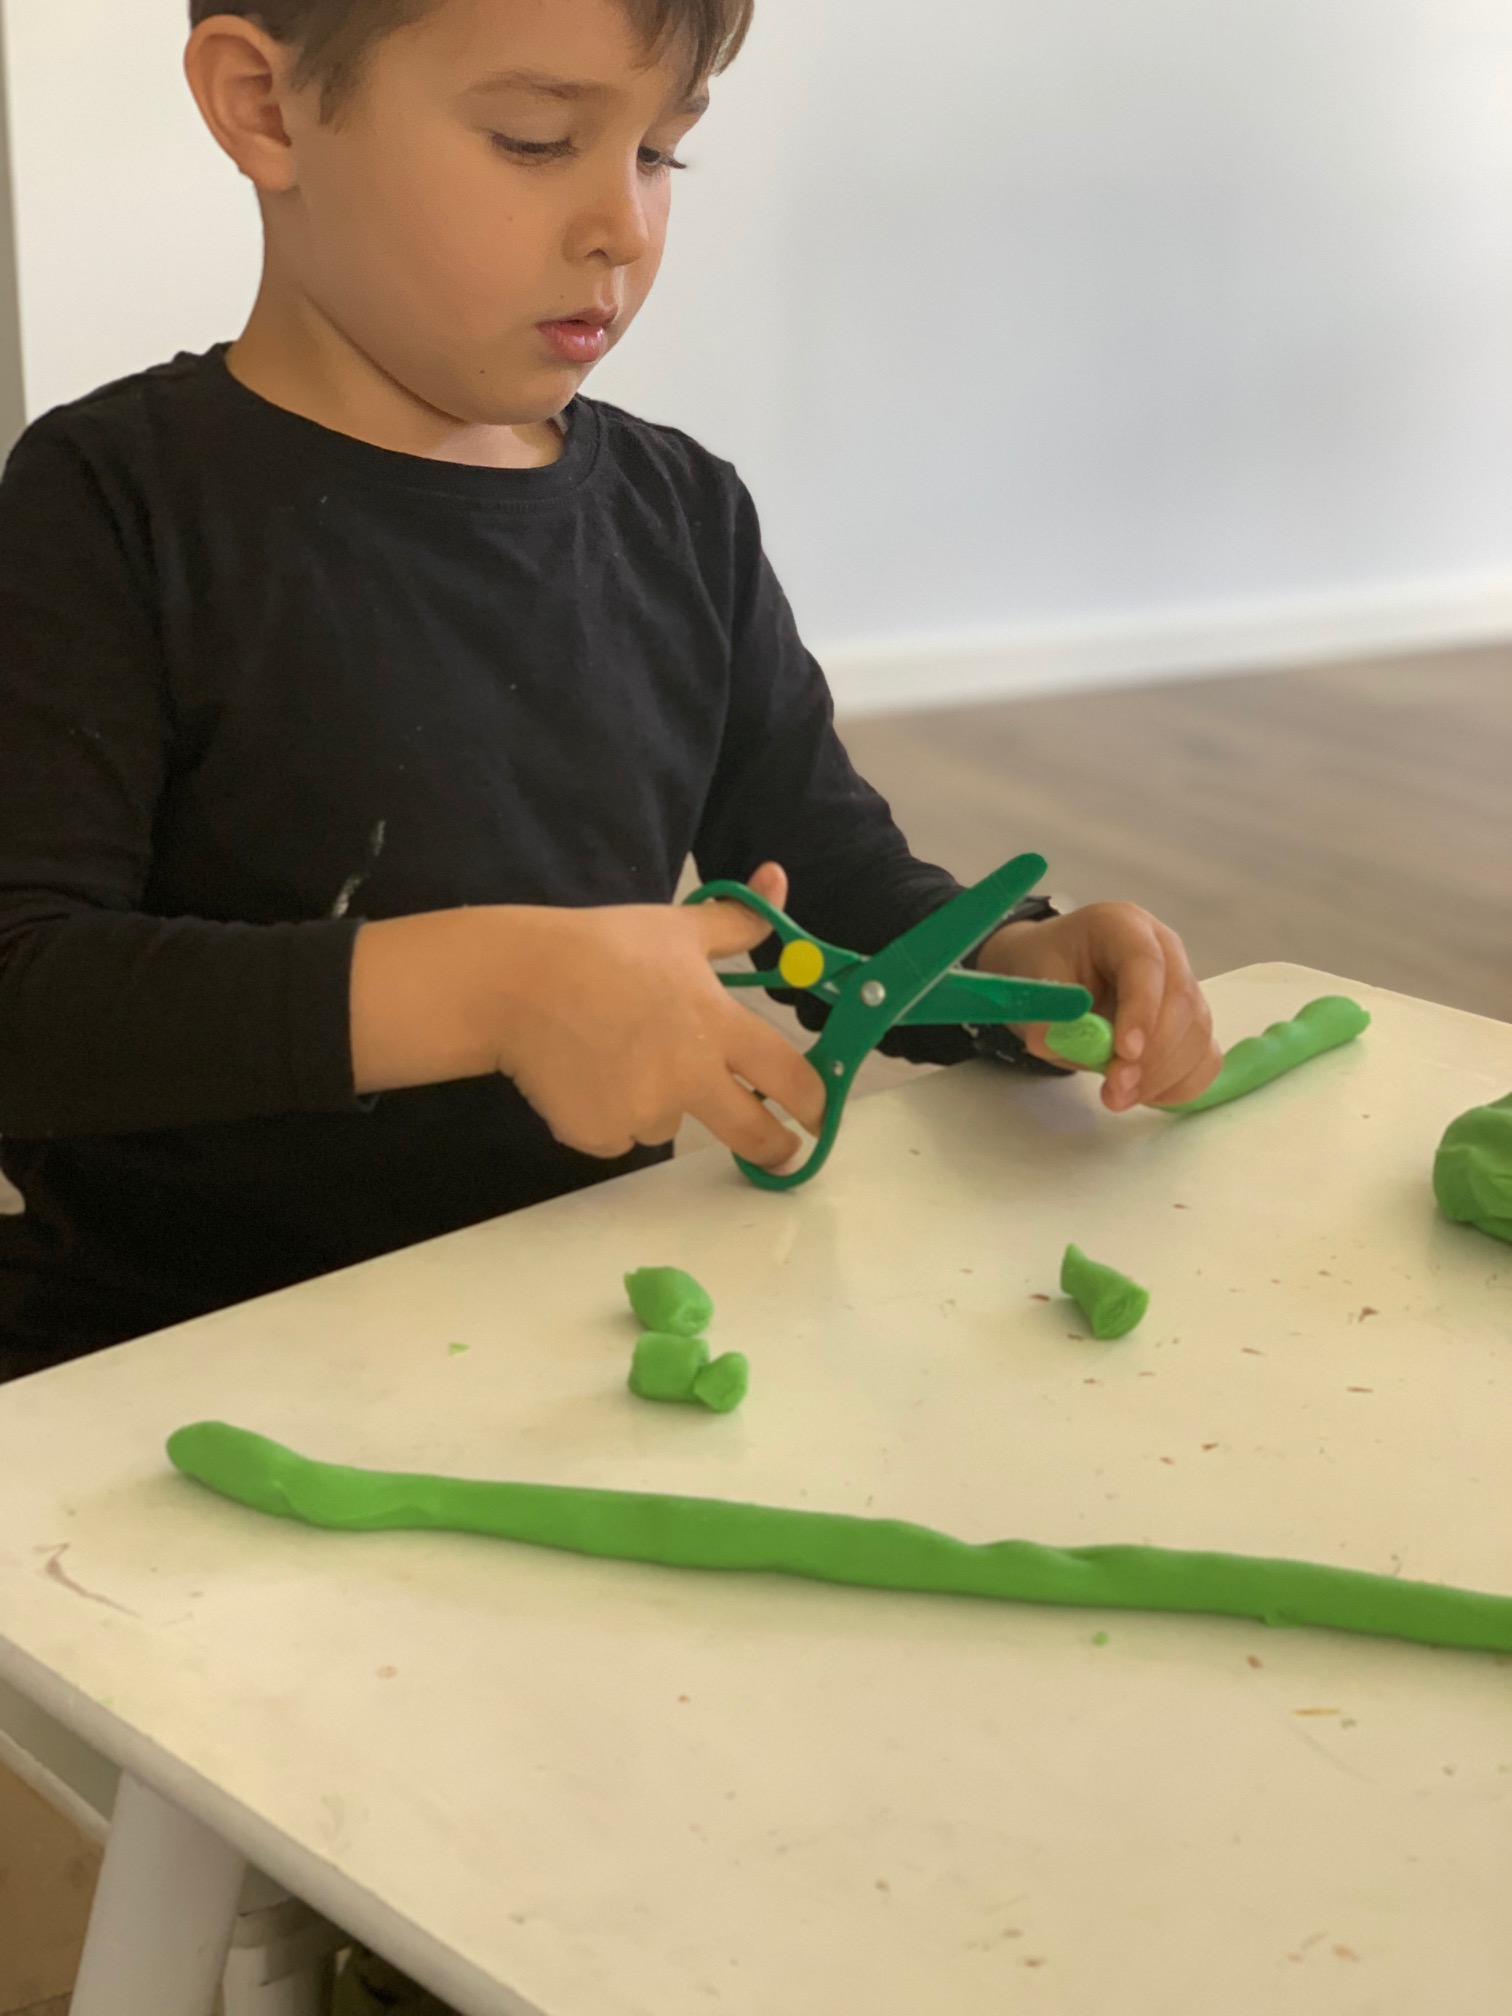 Making Play Dough Cookies: Scissor Practice & Creative Play - A